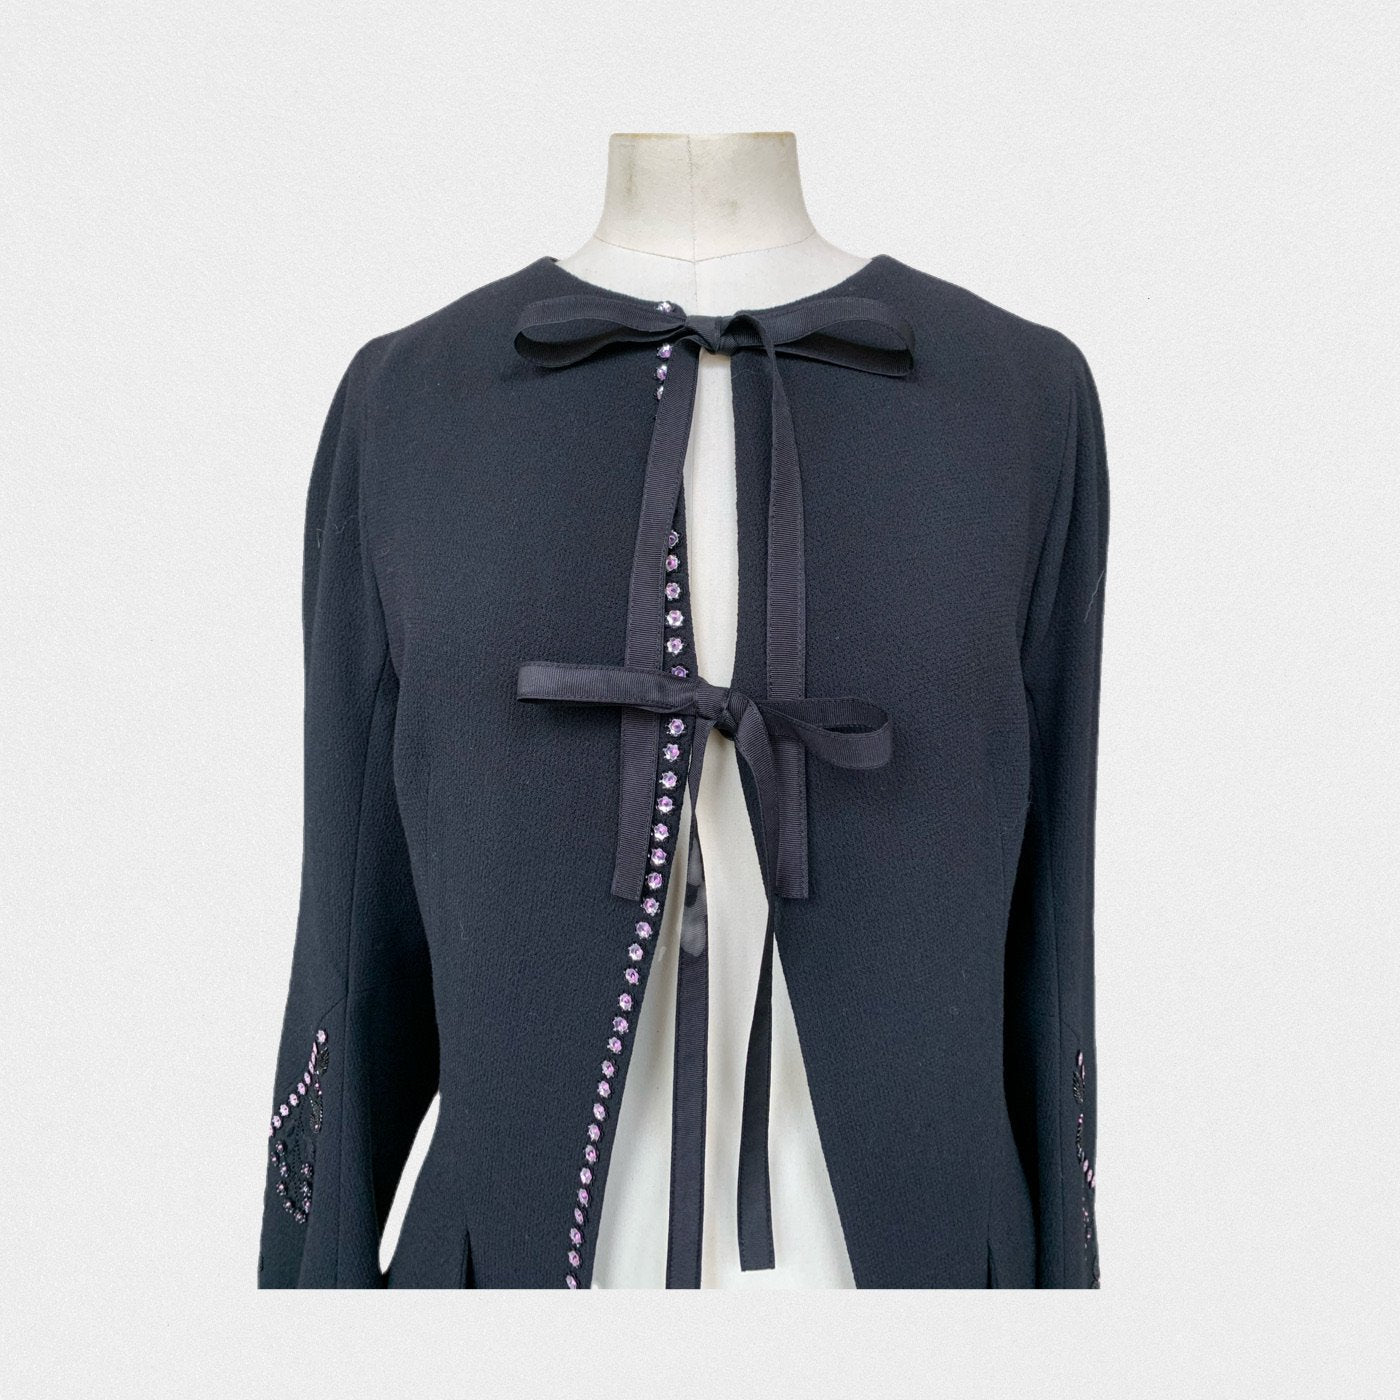 Lysis vintage Christian Dior coat by Raf Simons - S - 2010s